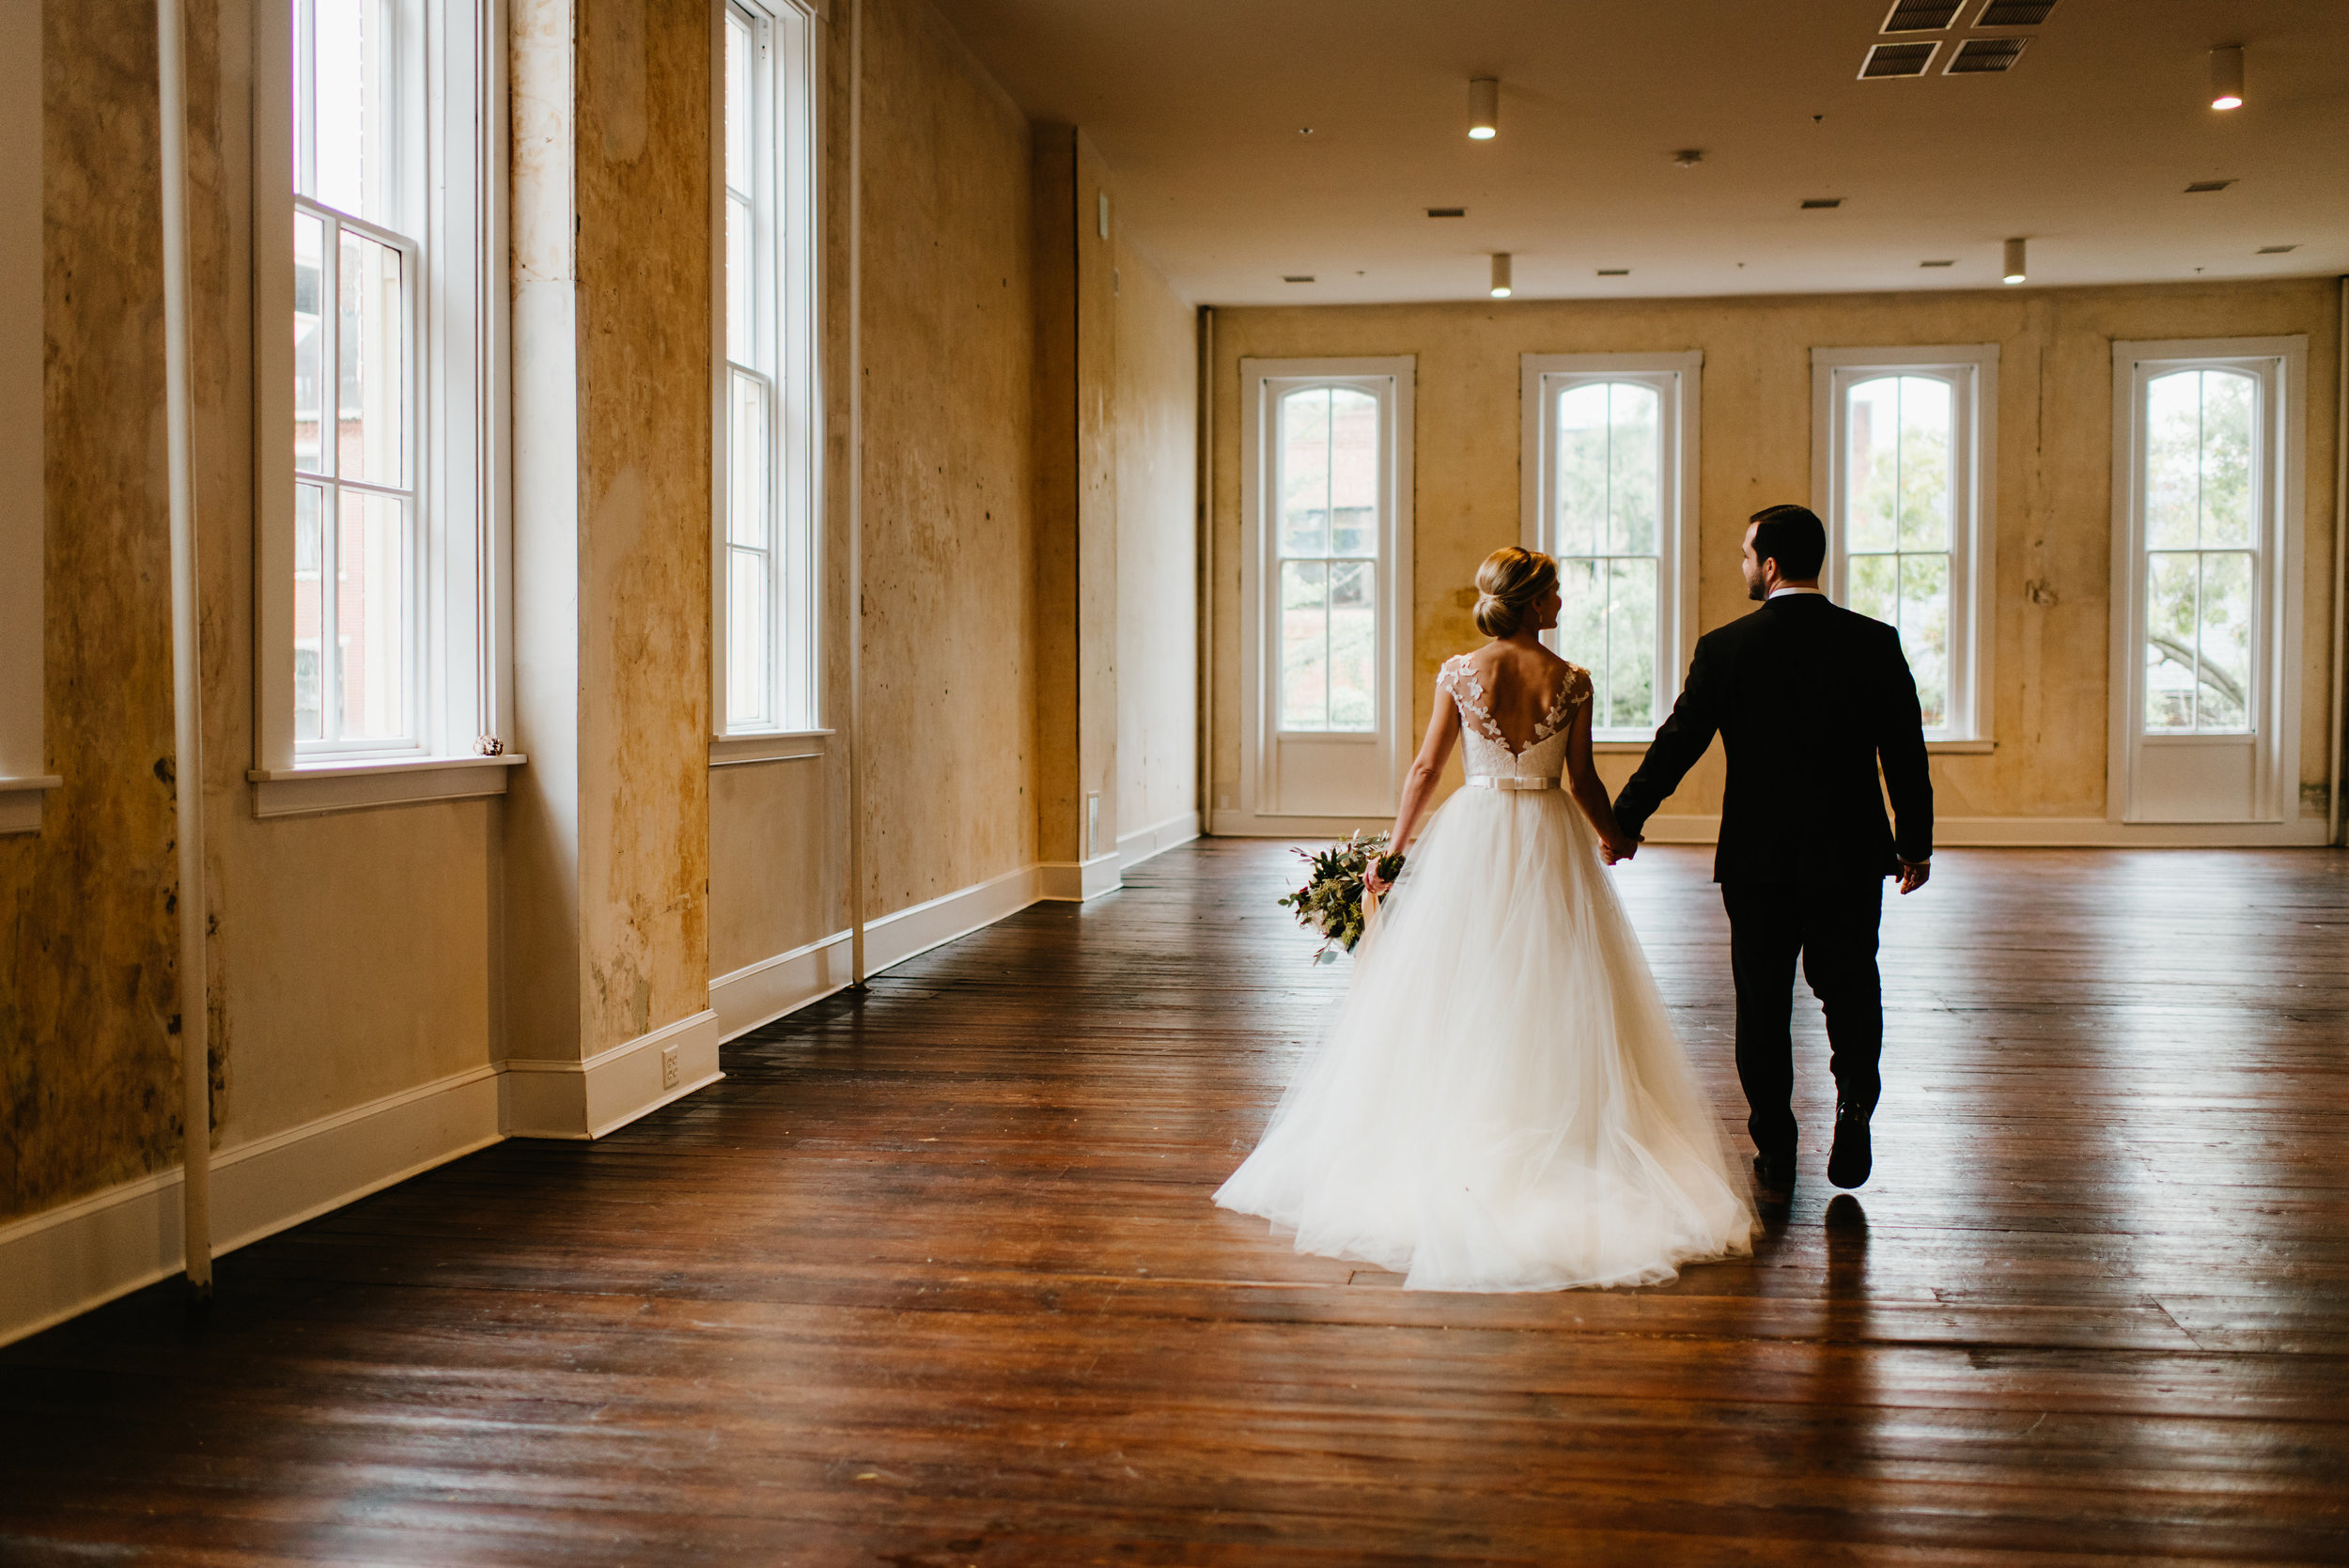 Bride and groom walking in Empire Room towards large windows